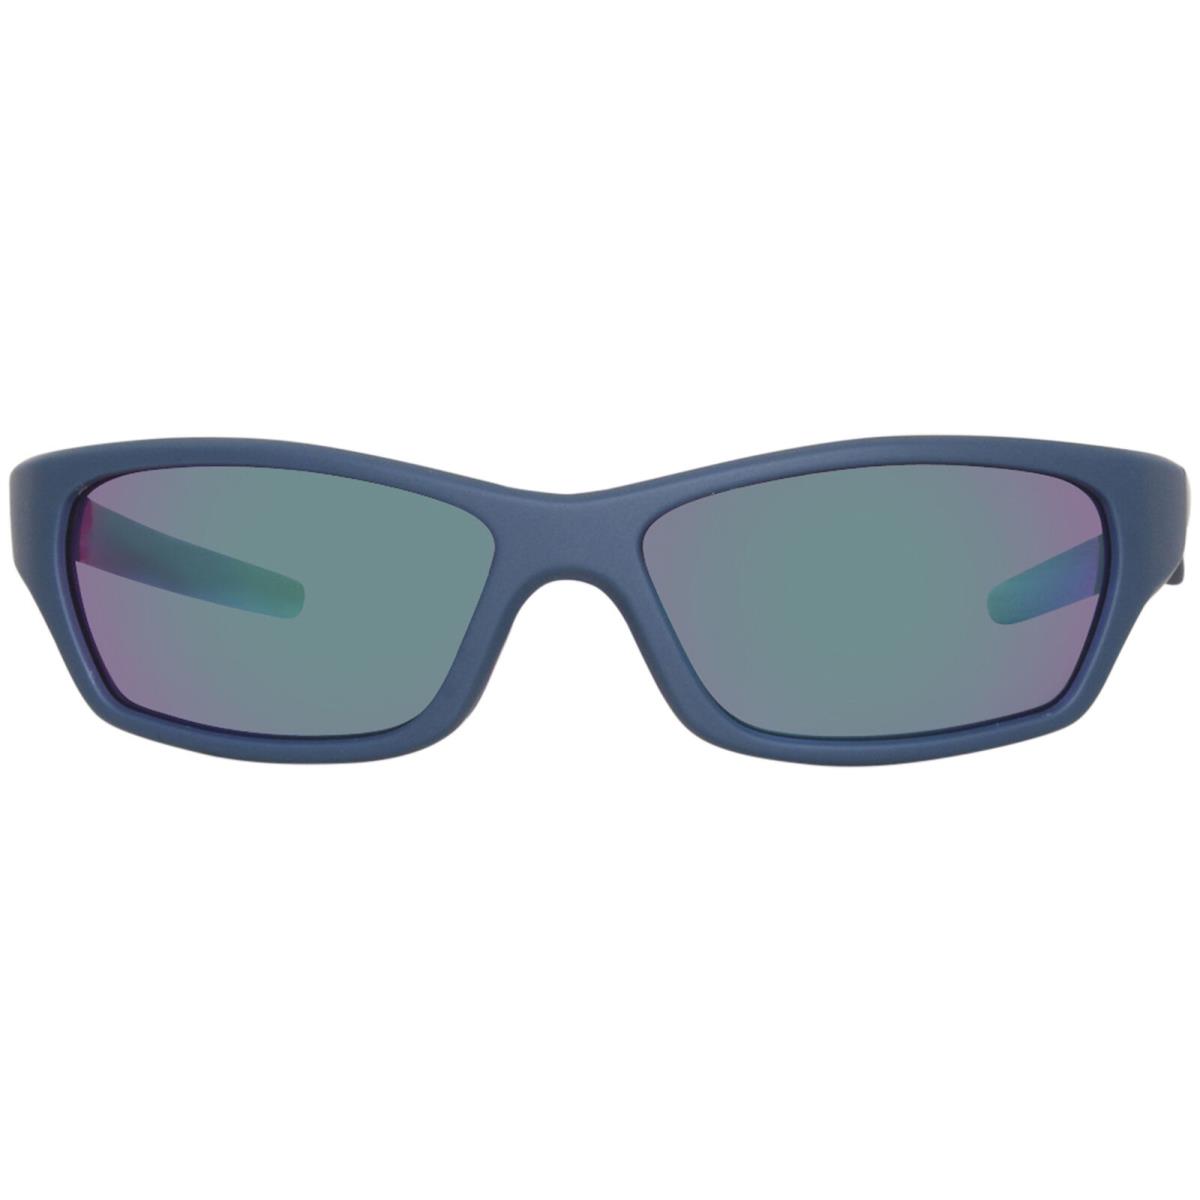 Nike Jolt-m DZ7379 402 Sunglasses Space Blue/grey/green Mirror Lenses 57mm